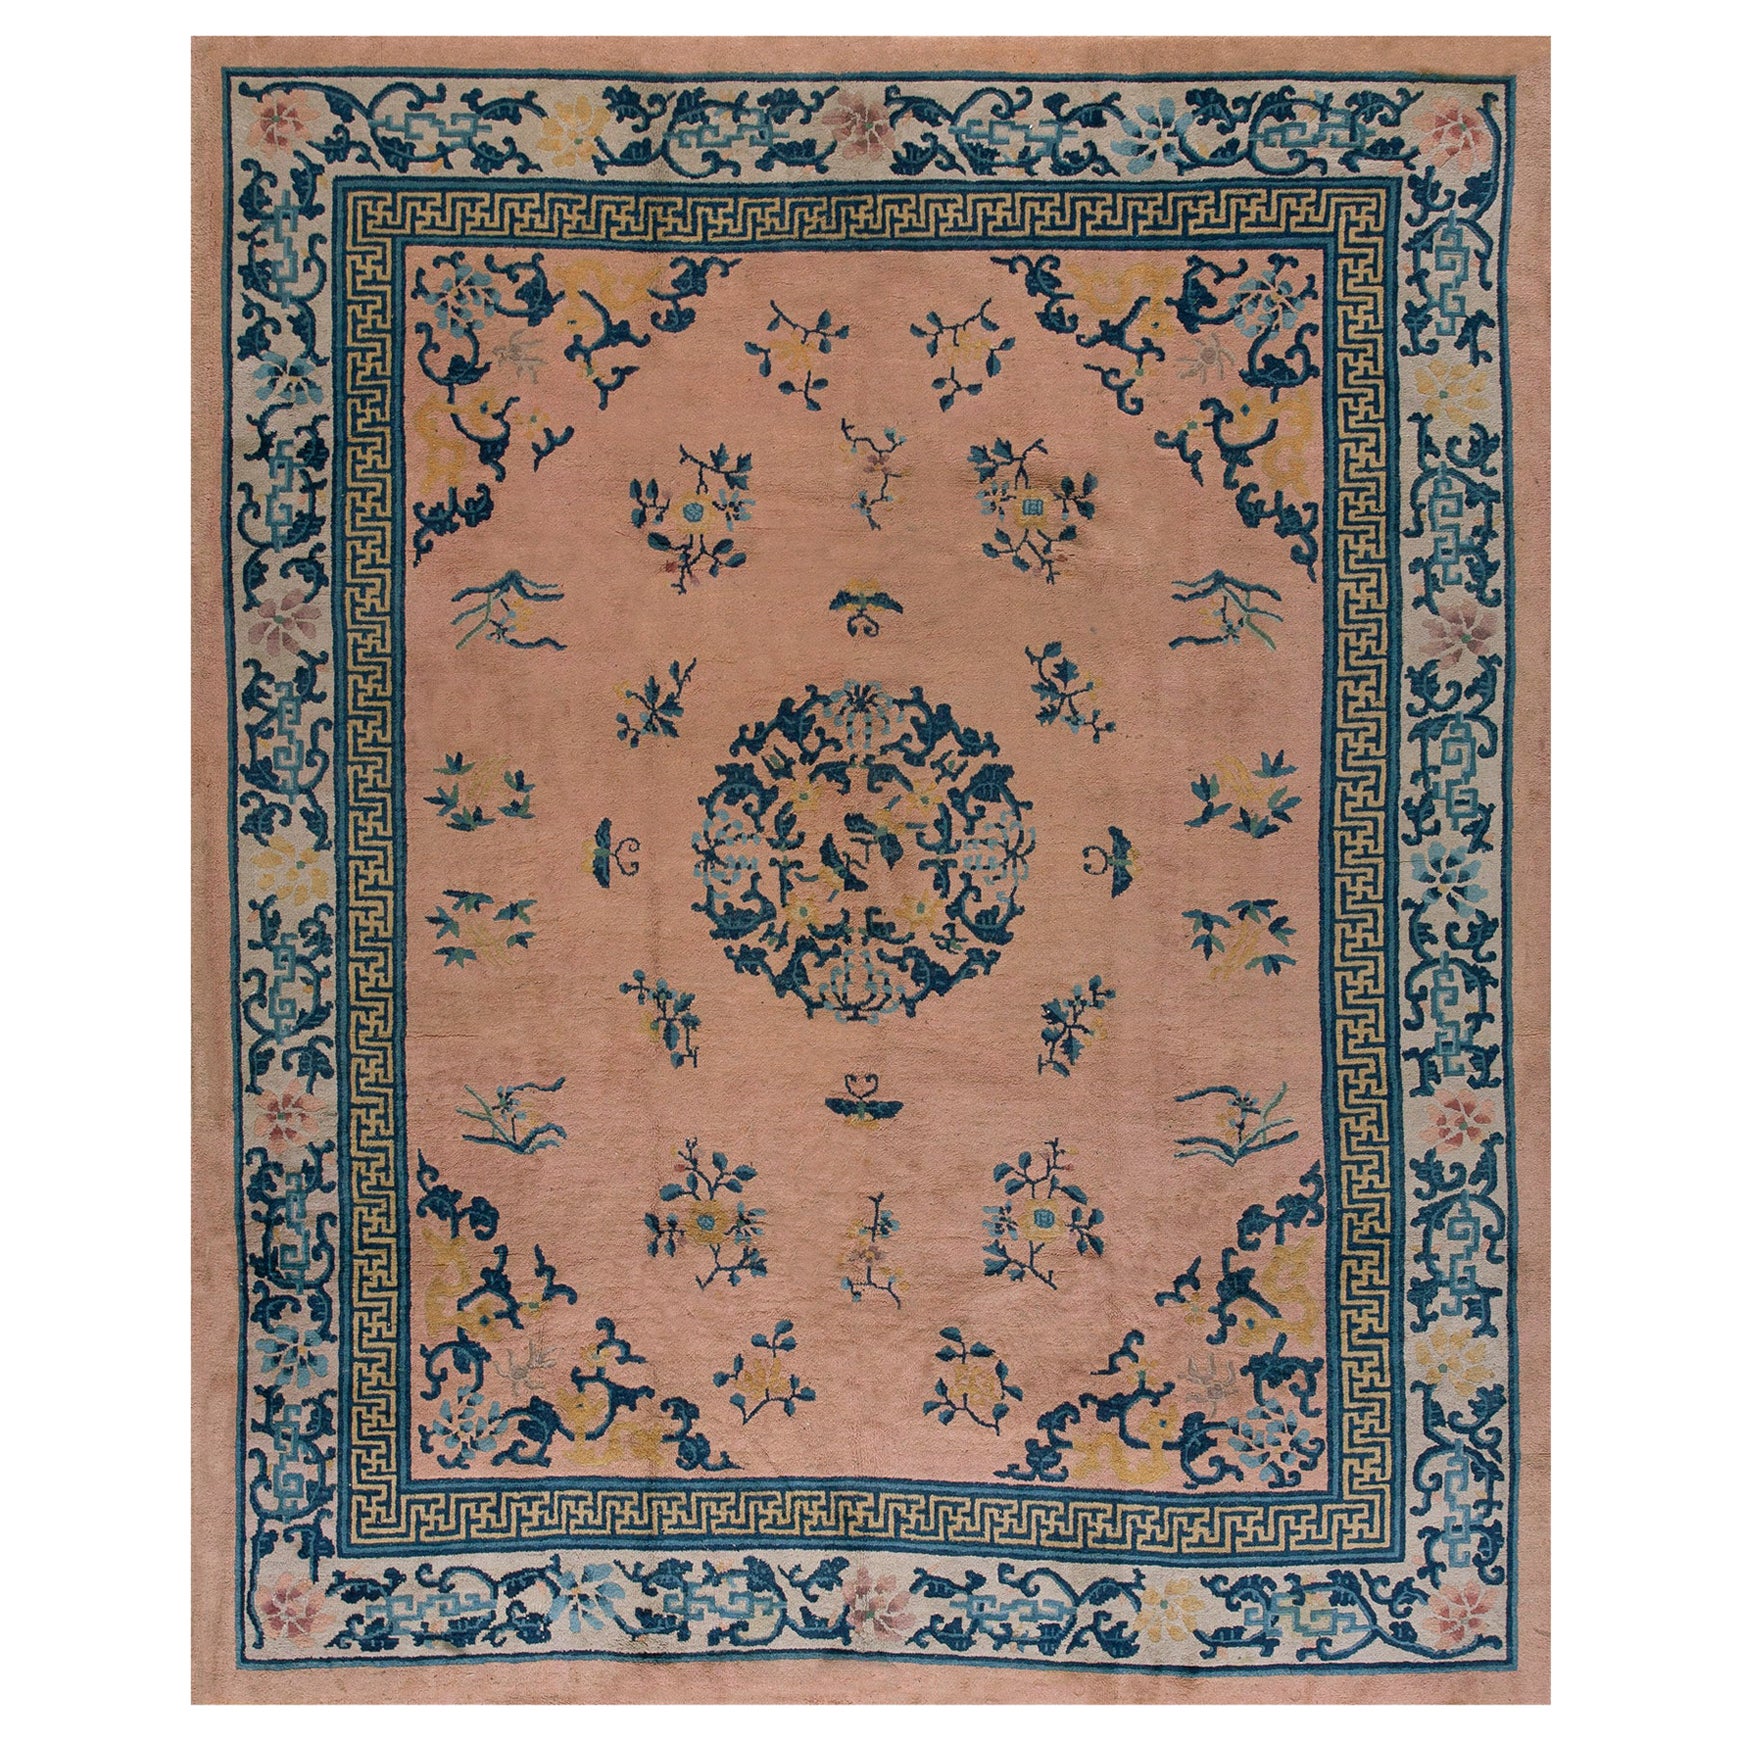 Early 20th Century Chinese Peking Carpet ( 8' 'x 10' - 245x 305 cm ) 